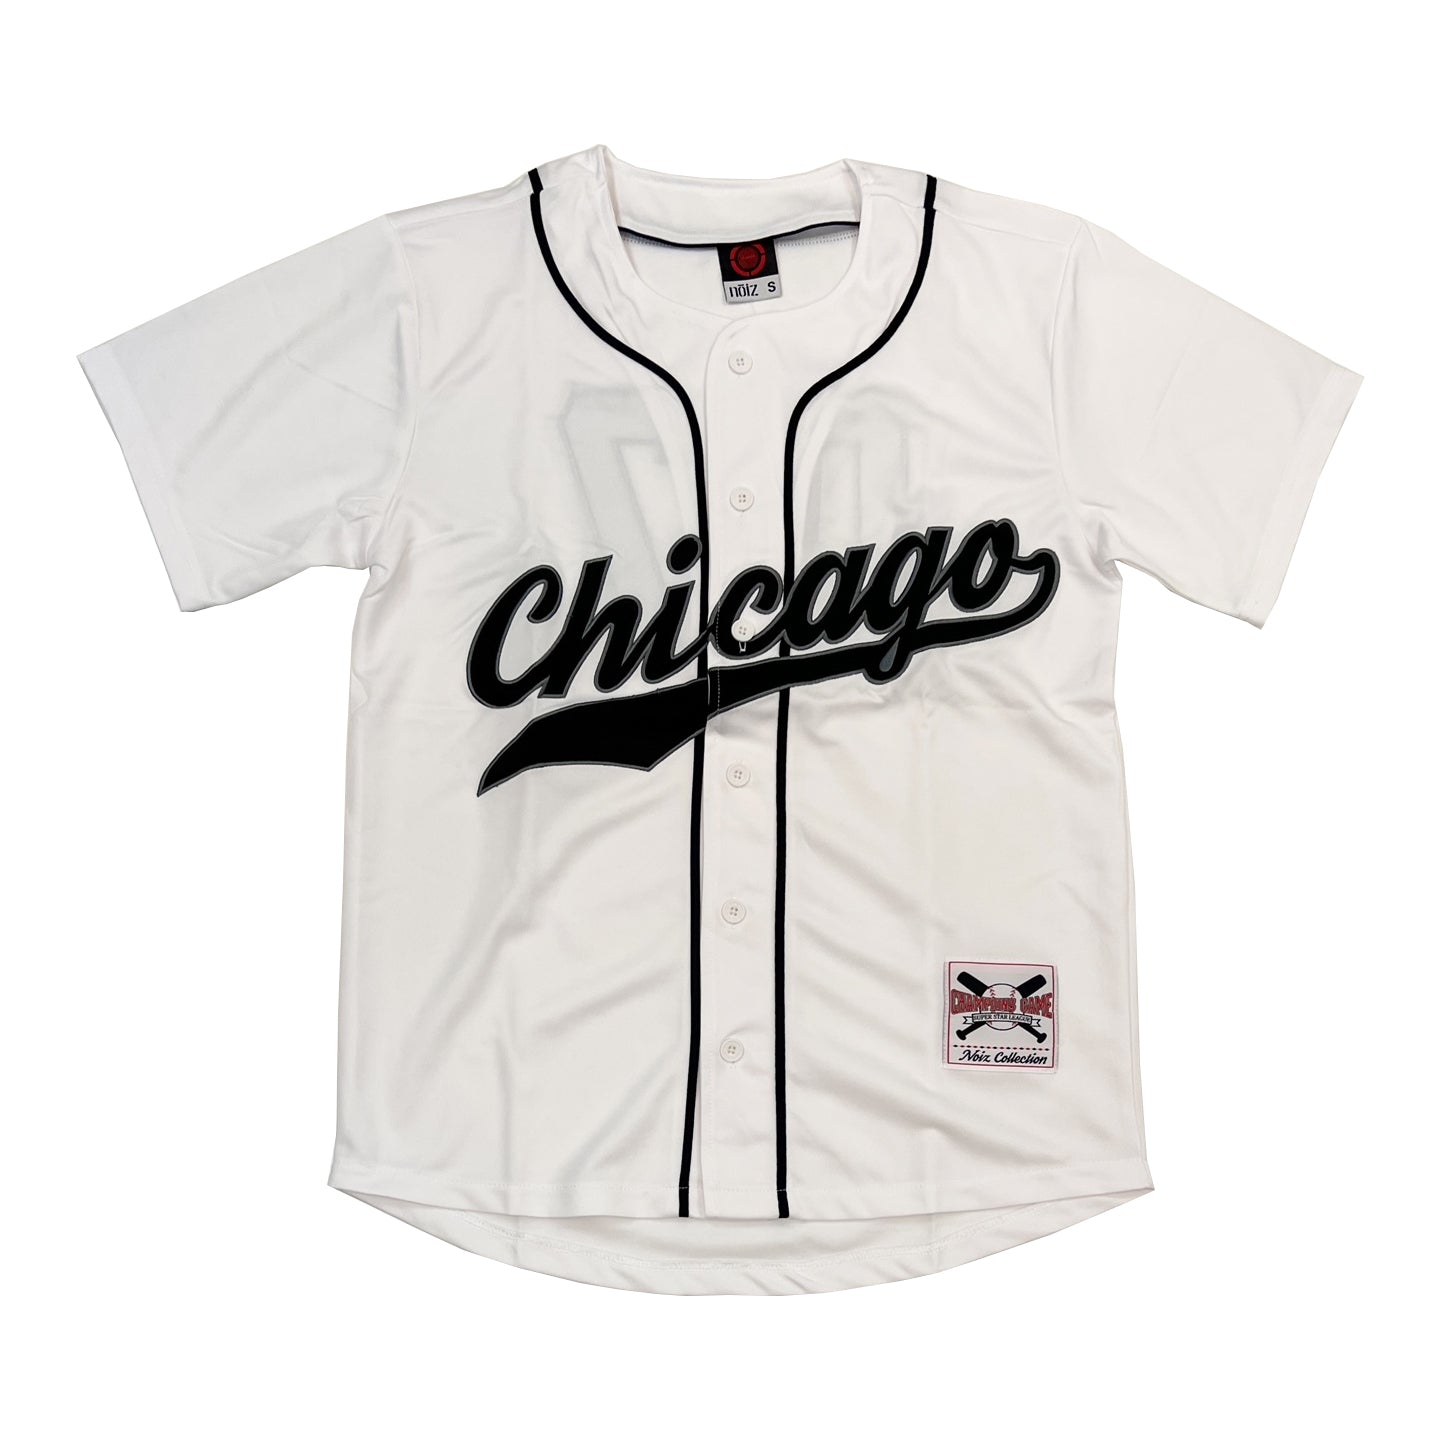 Noiz Chicago Baseball Jersey (White/Black) M